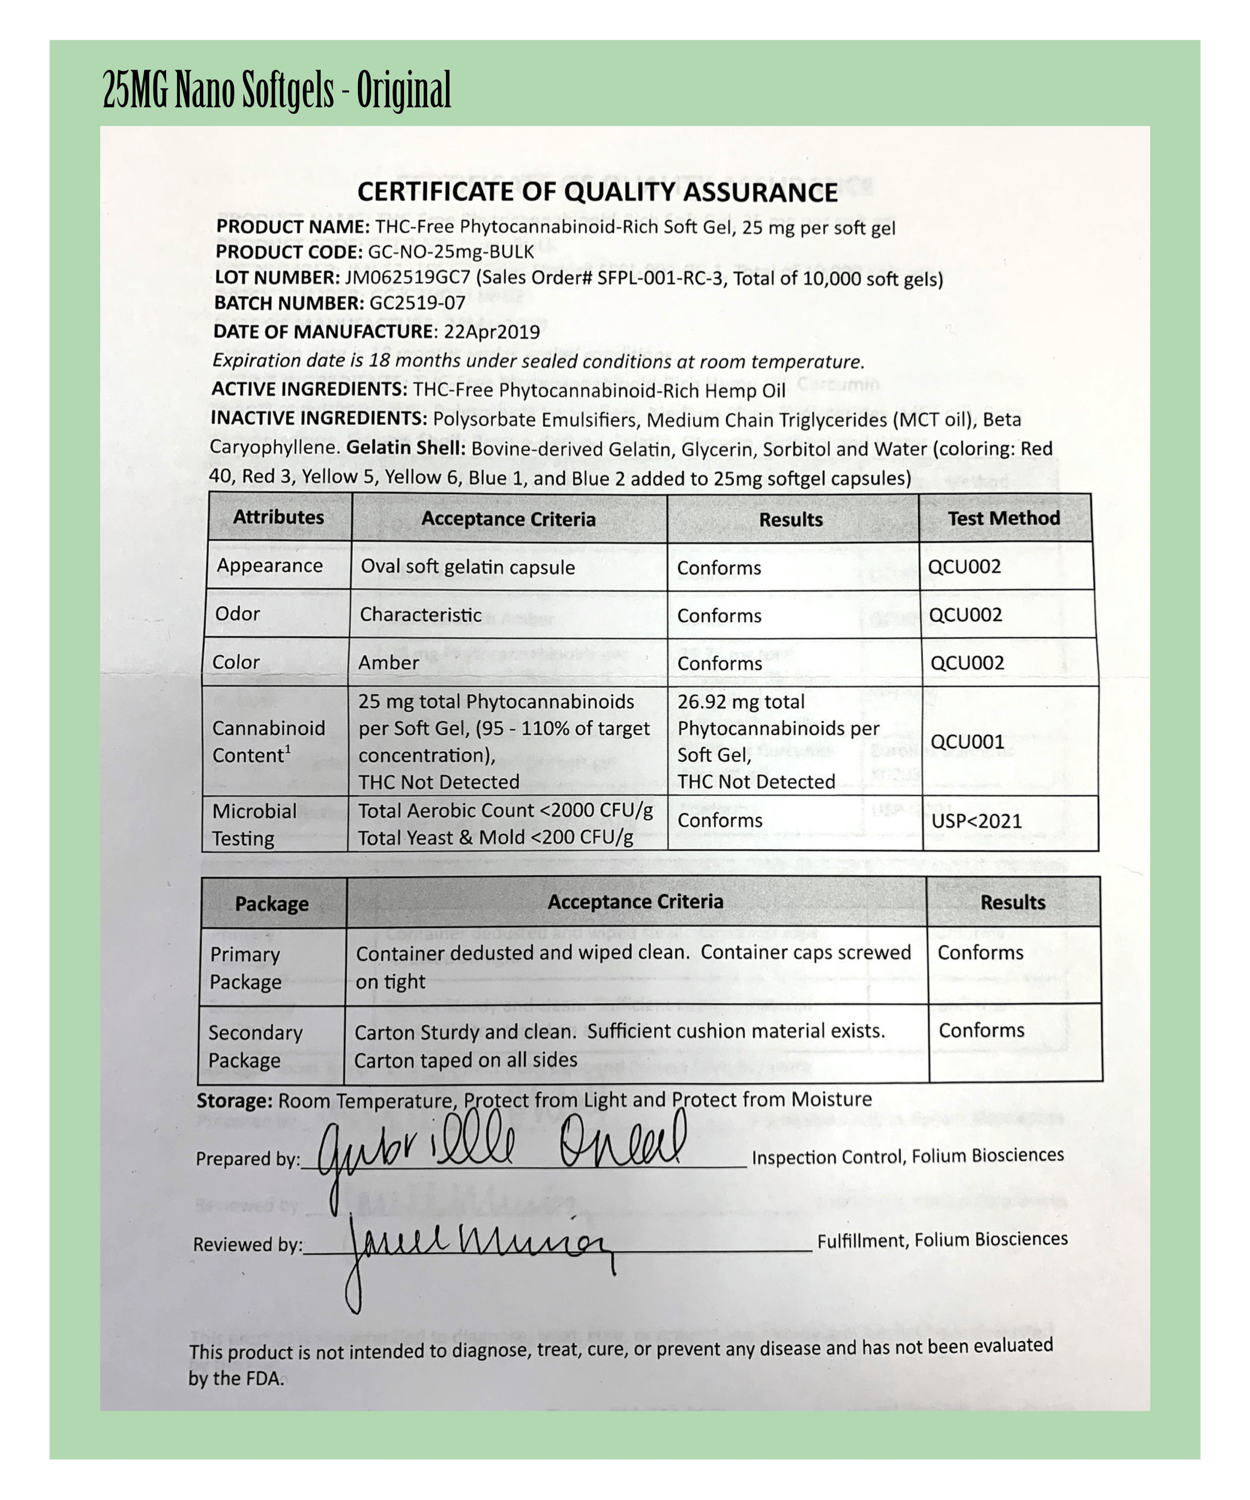 Texas Tonix - 25mg Nano CBD Soft Gels, 30 count Certificate of Quality Assurance